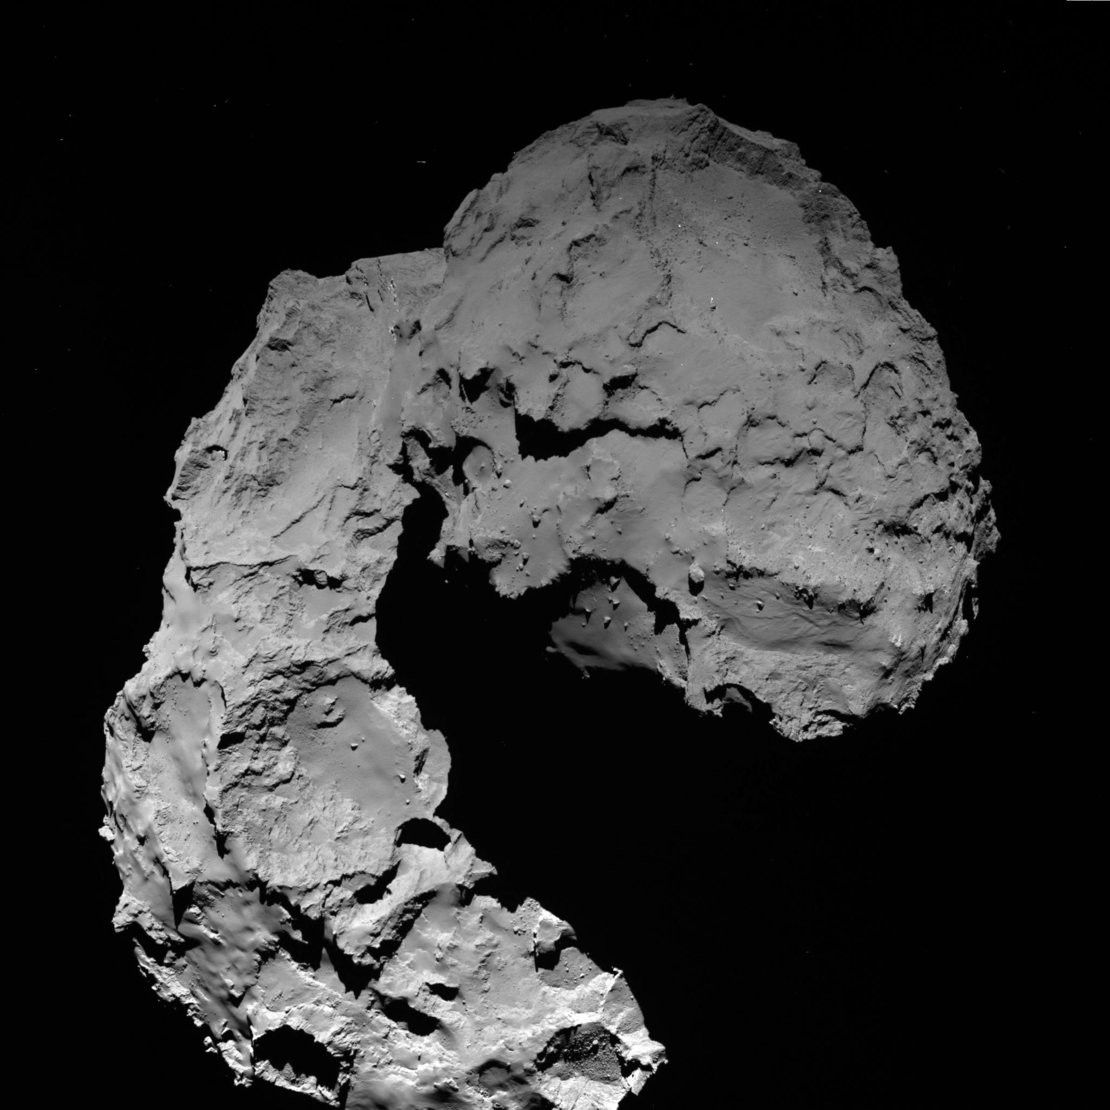 Comet_on_29_September_2016_OSIRIS_wide-angle_camera_article_mob.jpg